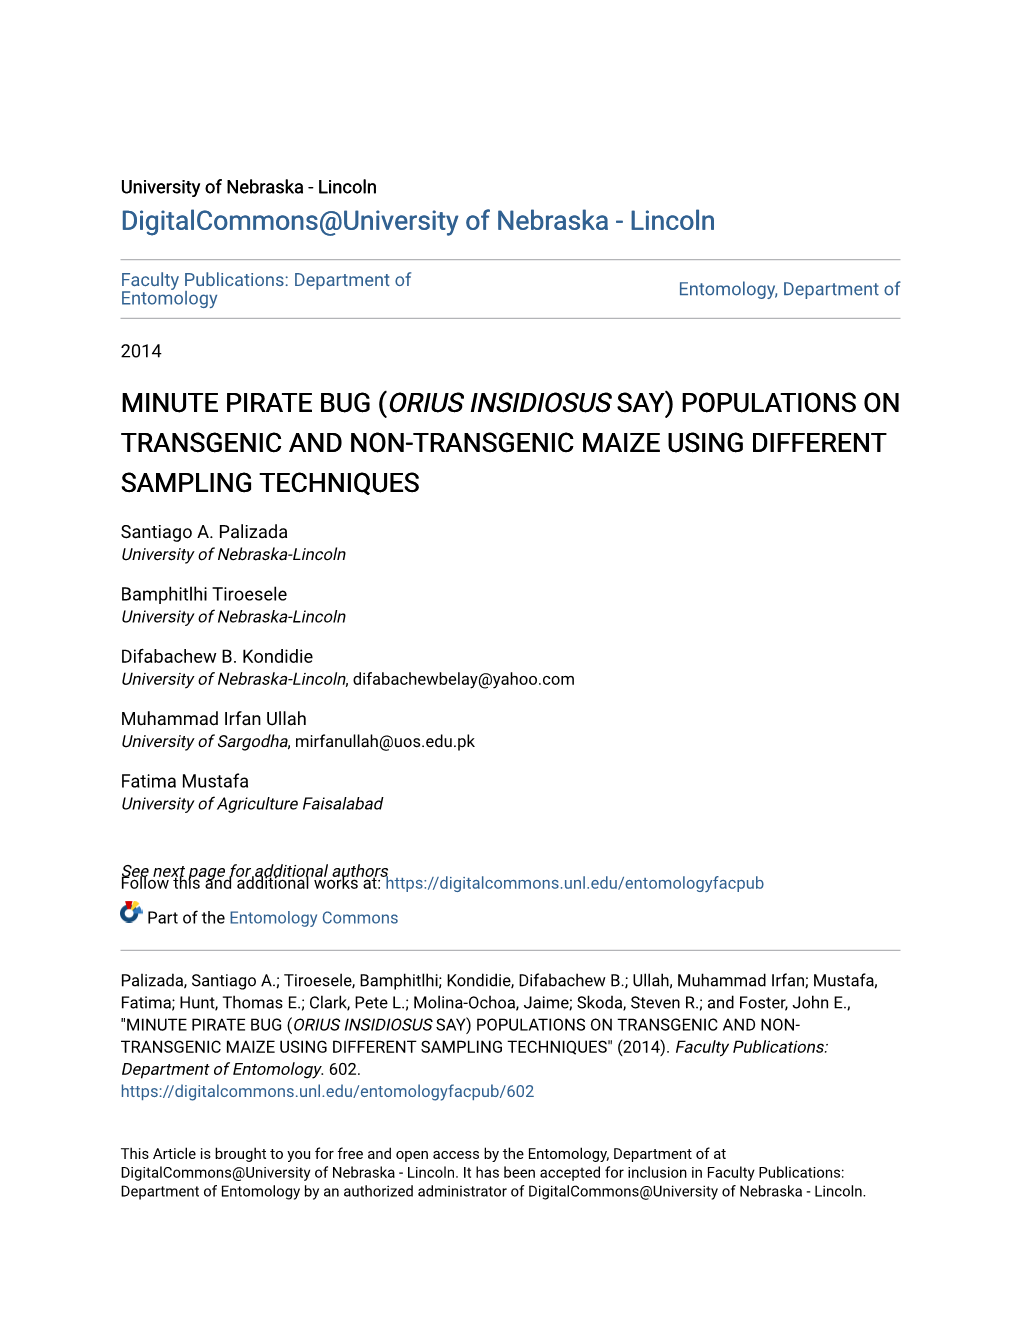 Minute Pirate Bug (Orius Insidiosus Say) Populations on Transgenic and Non-Transgenic Maize Using Different Sampling Techniques